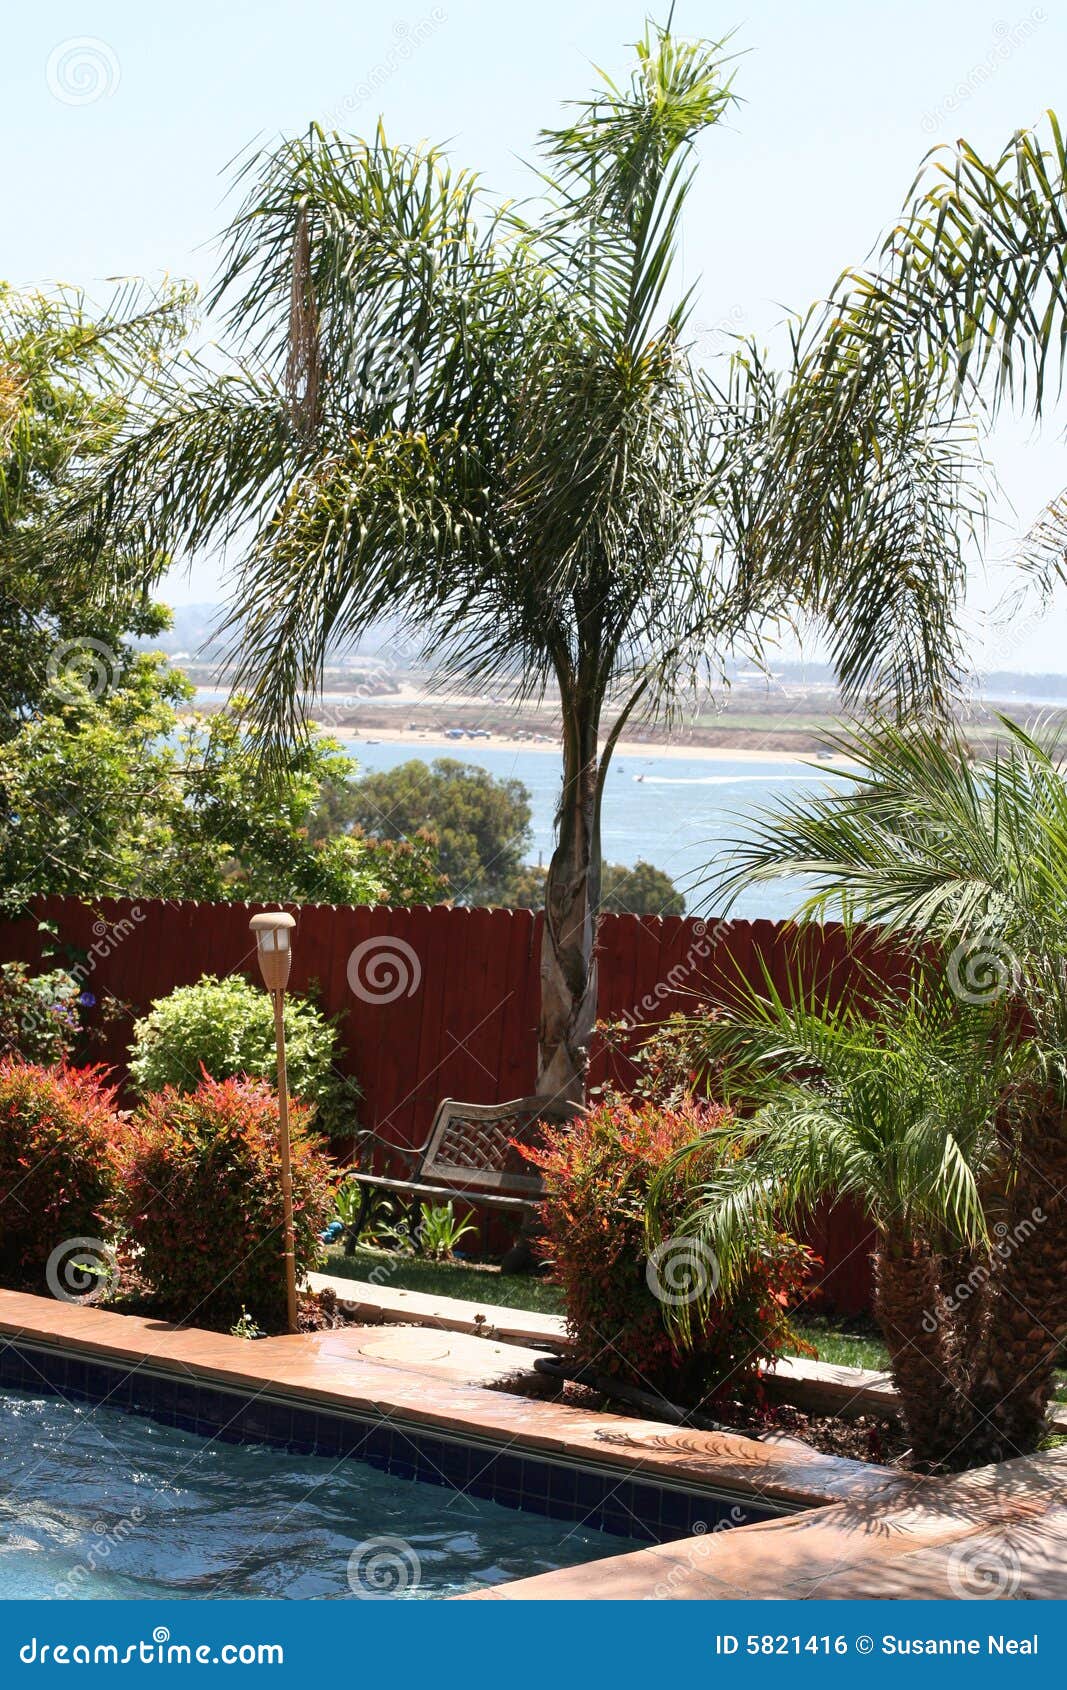 palm tree pool bay backyard 5821416